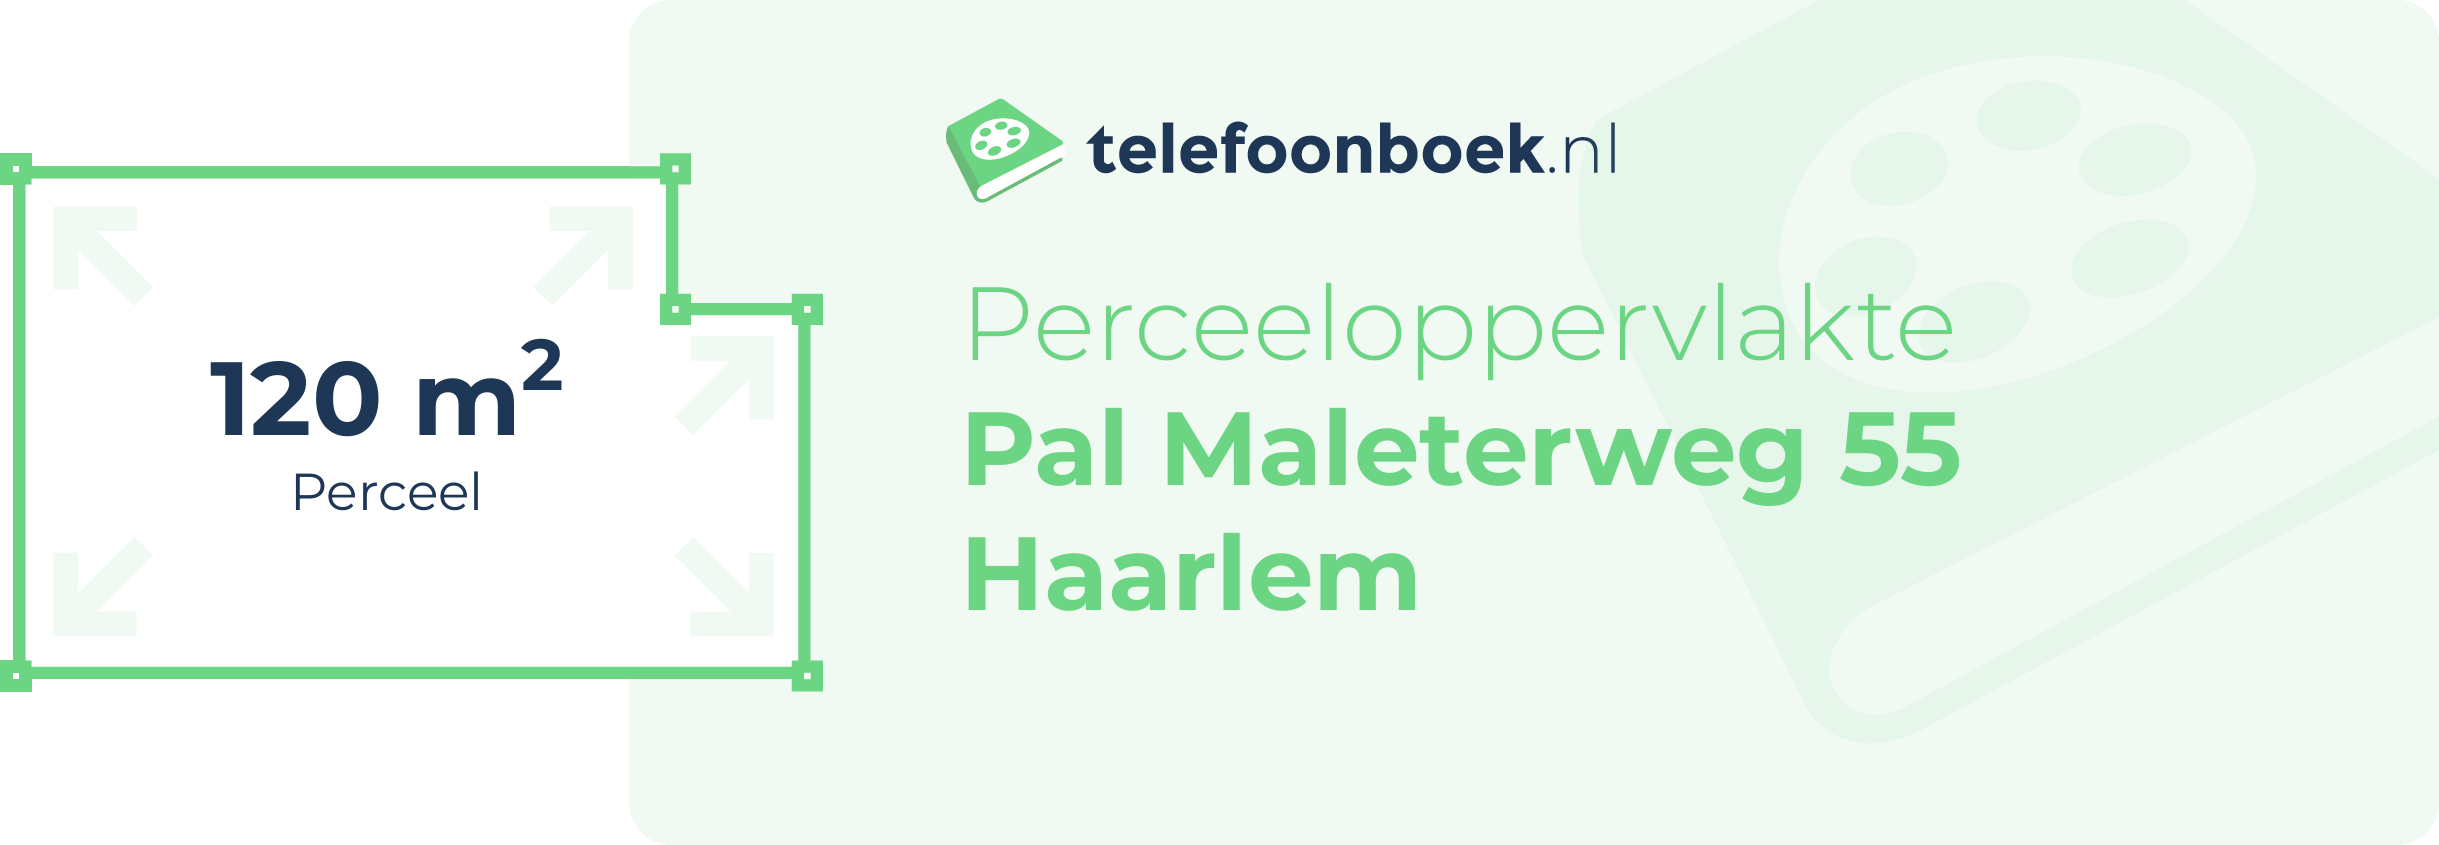 Perceeloppervlakte Pal Maleterweg 55 Haarlem